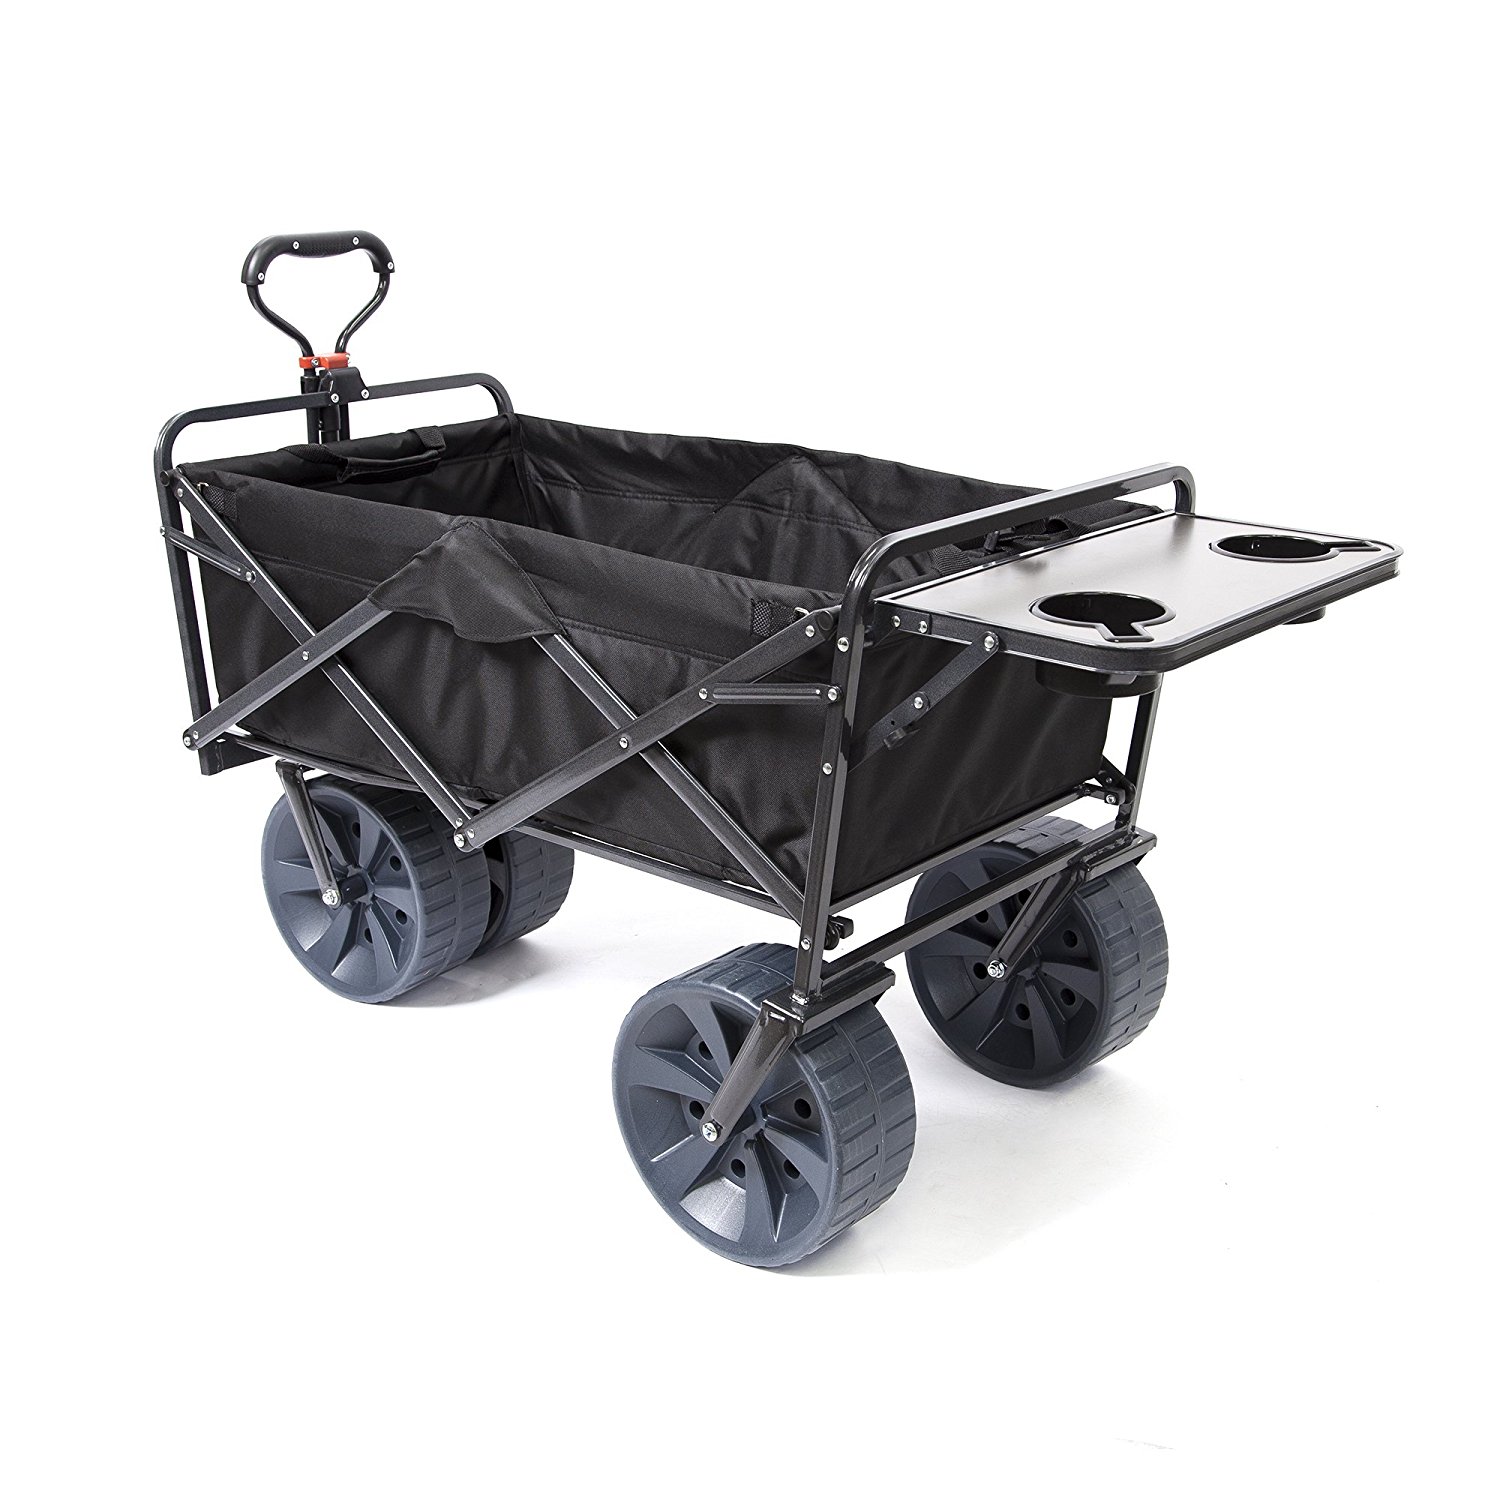 Mac Sports Heavy Duty Collapsible Folding [All Terrain Wagon] Beach Cart-Black with Table